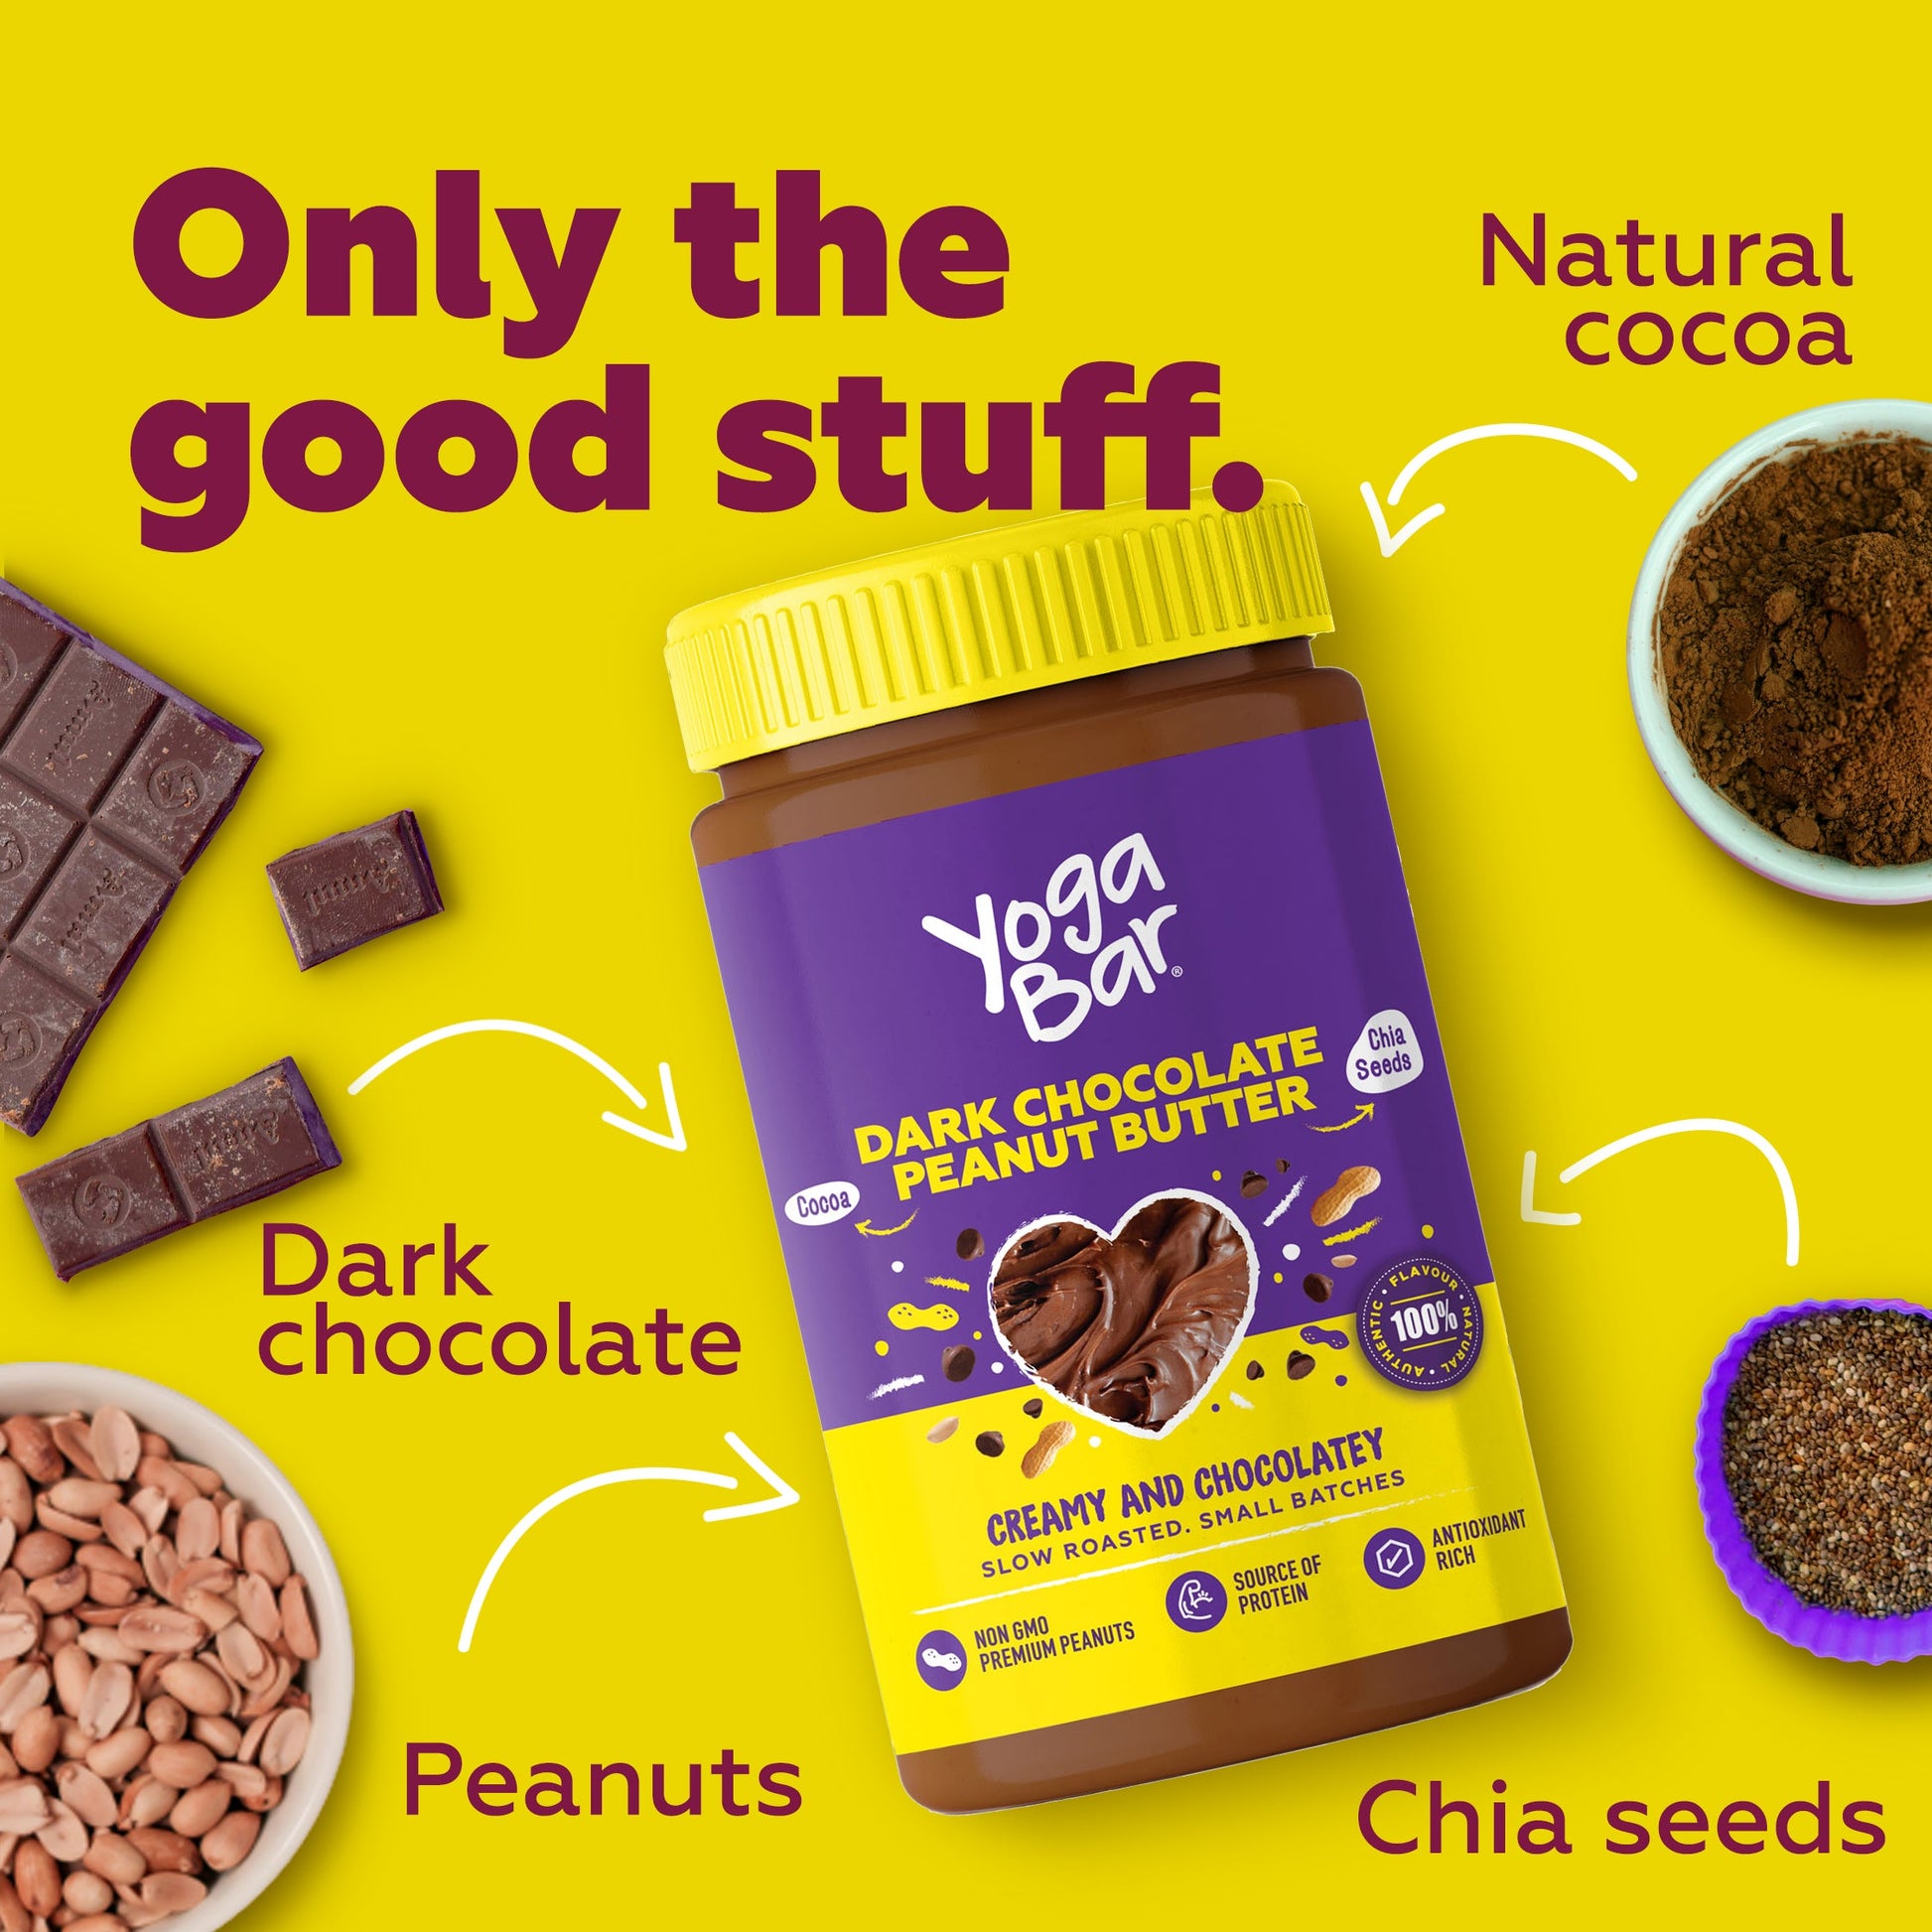 Yoga Bar Dark Chocolate Peanut Butter, 1kg: High in Protein